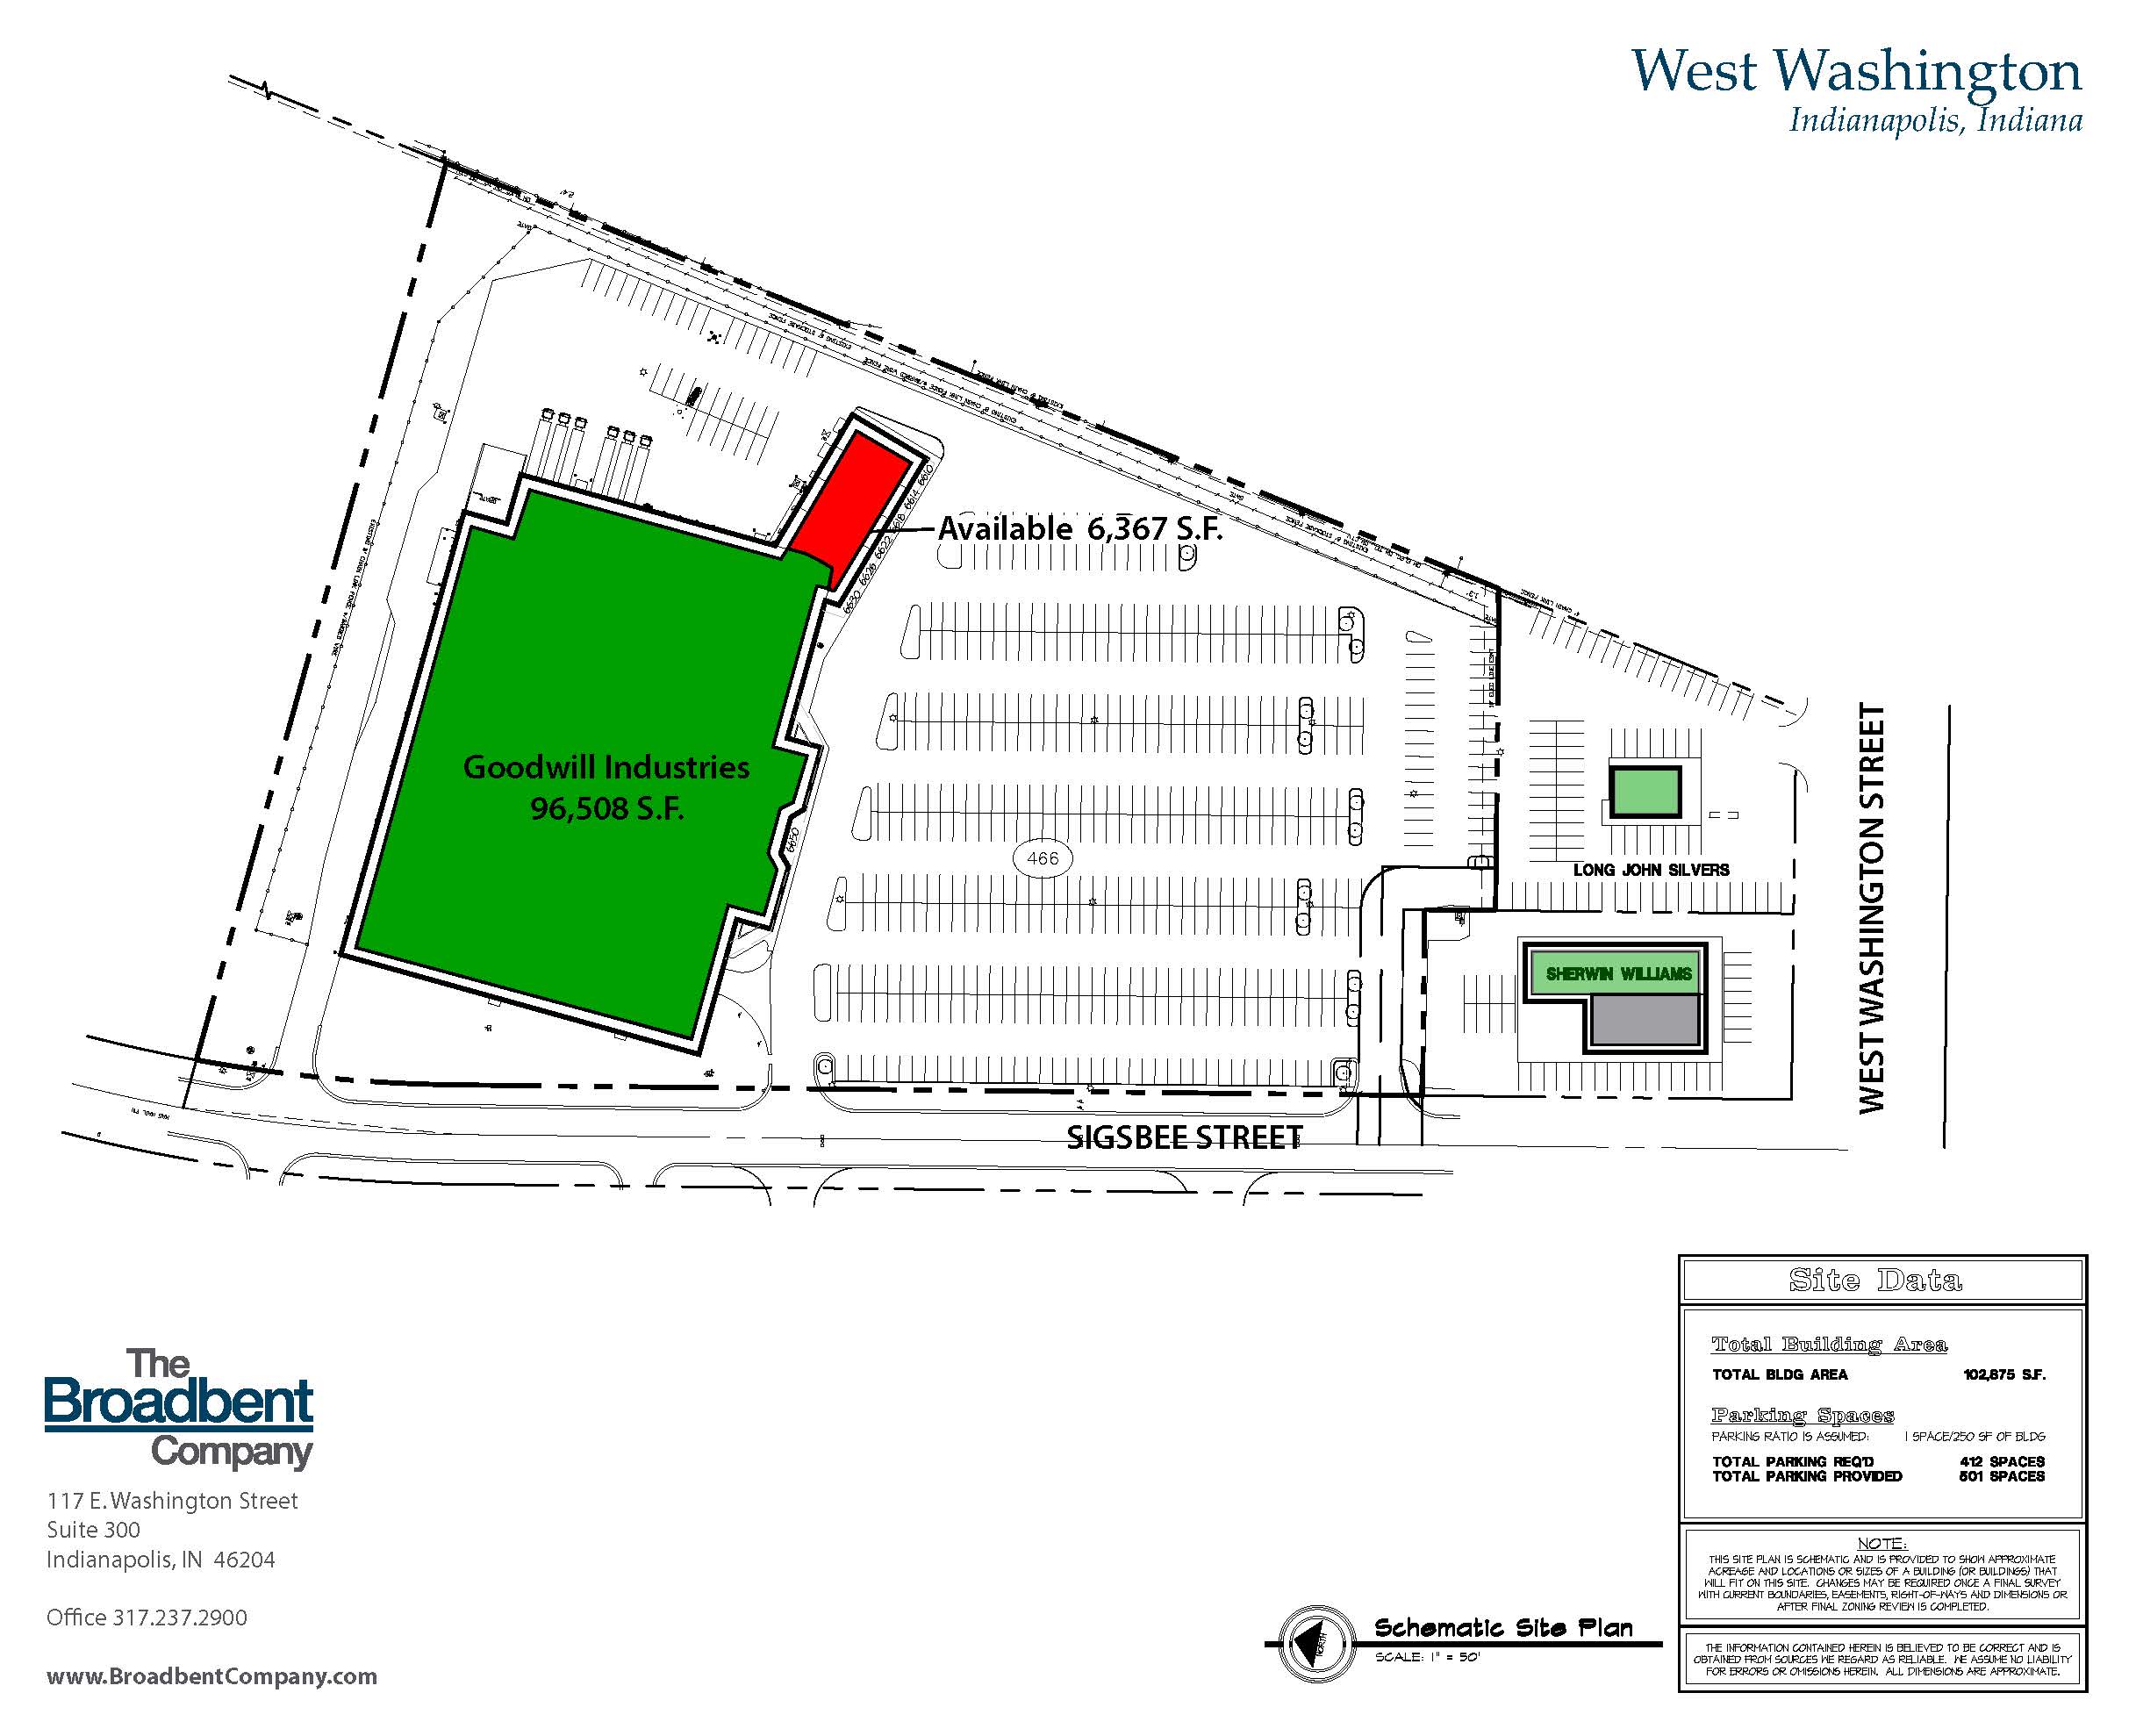 new West Washington Site Plan